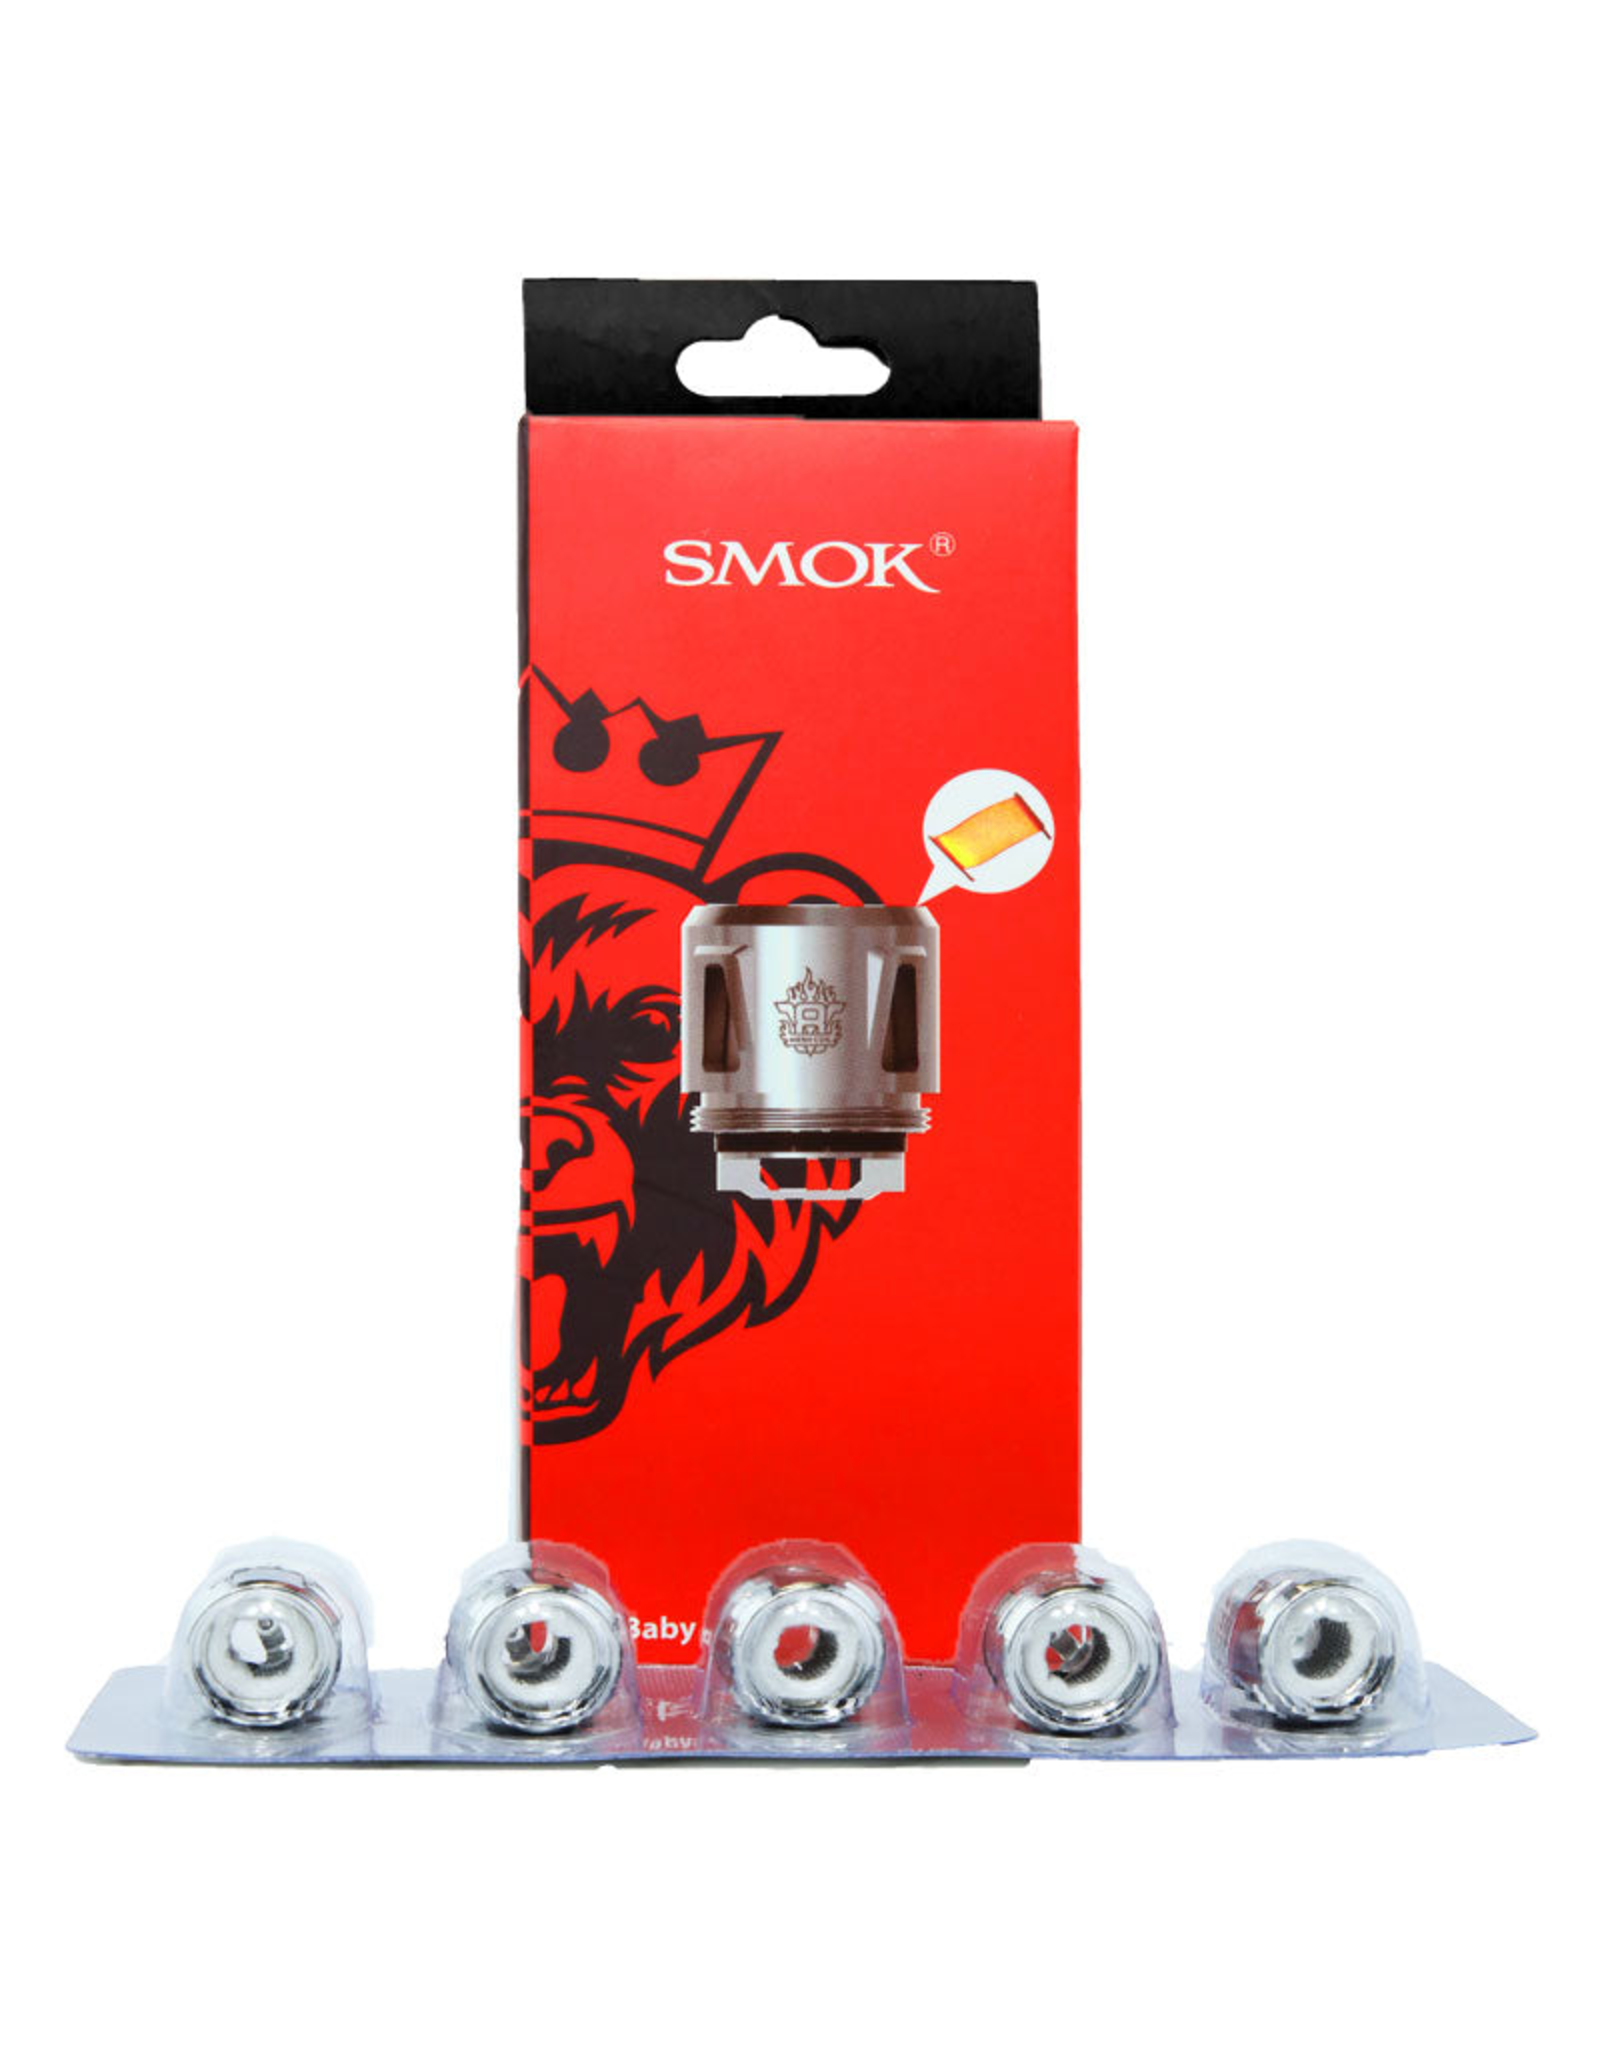 SmokTech SmokTech Coil Smok Baby Mesh box